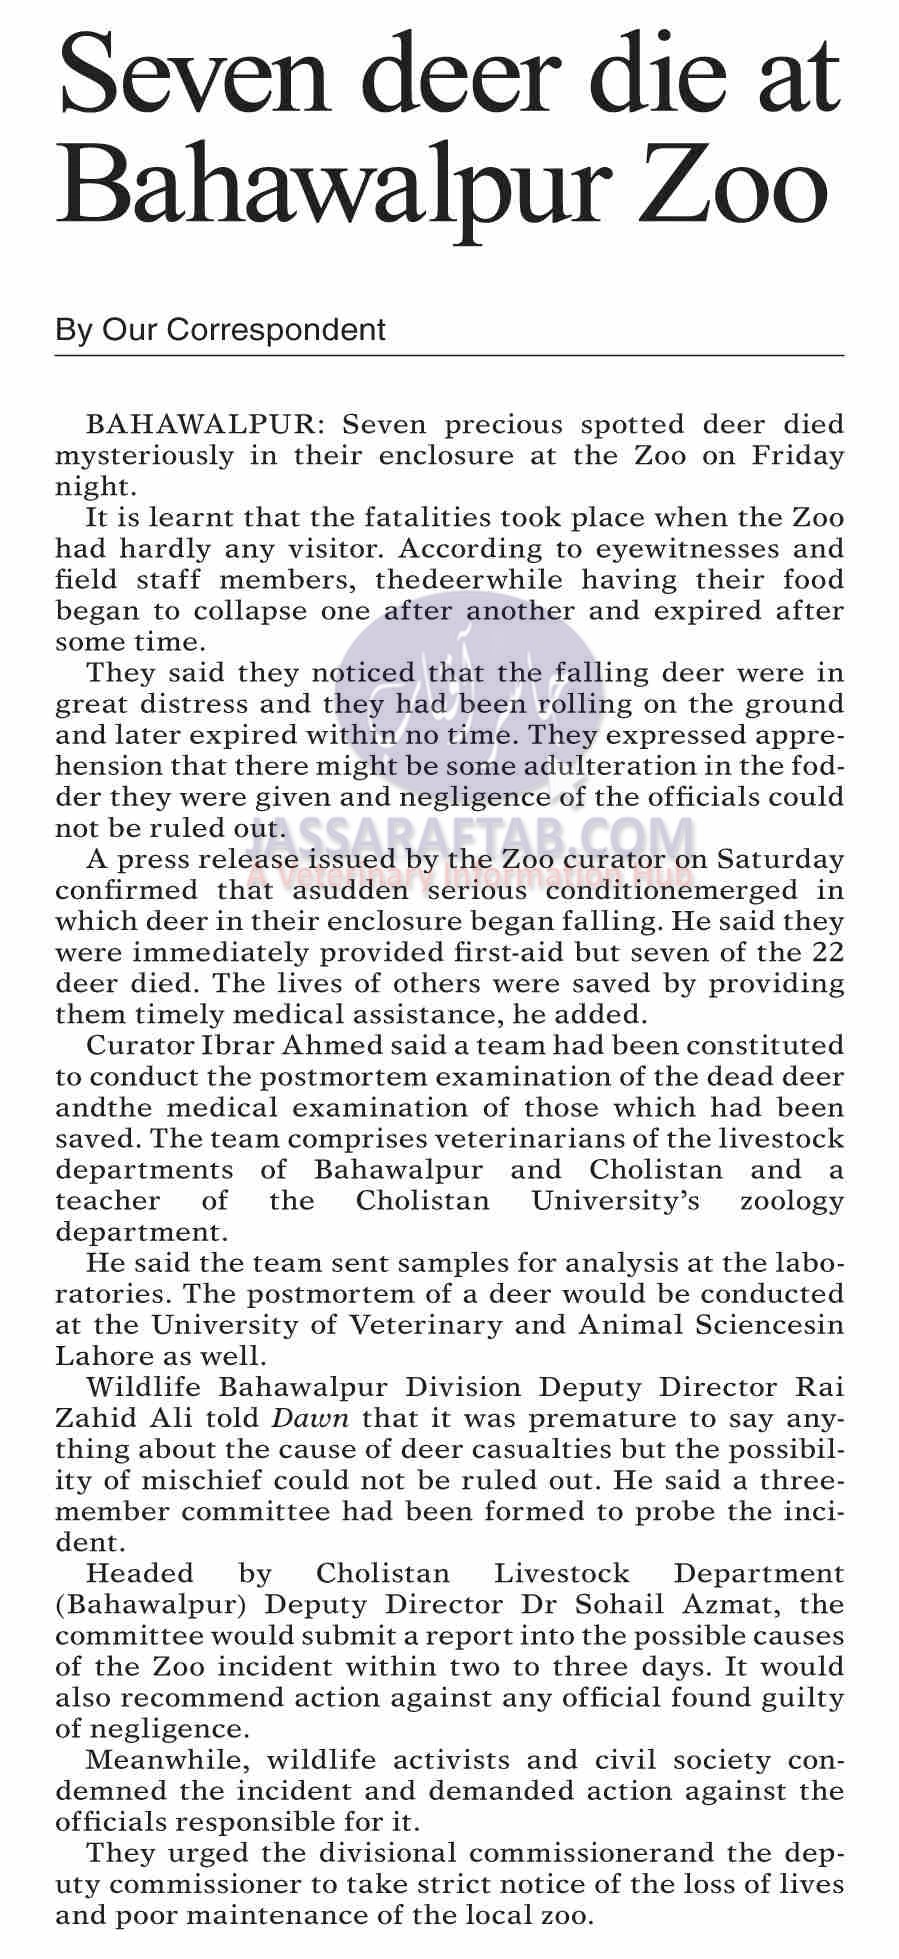 Seven precious spotted deer died at Bahawalpur zoo